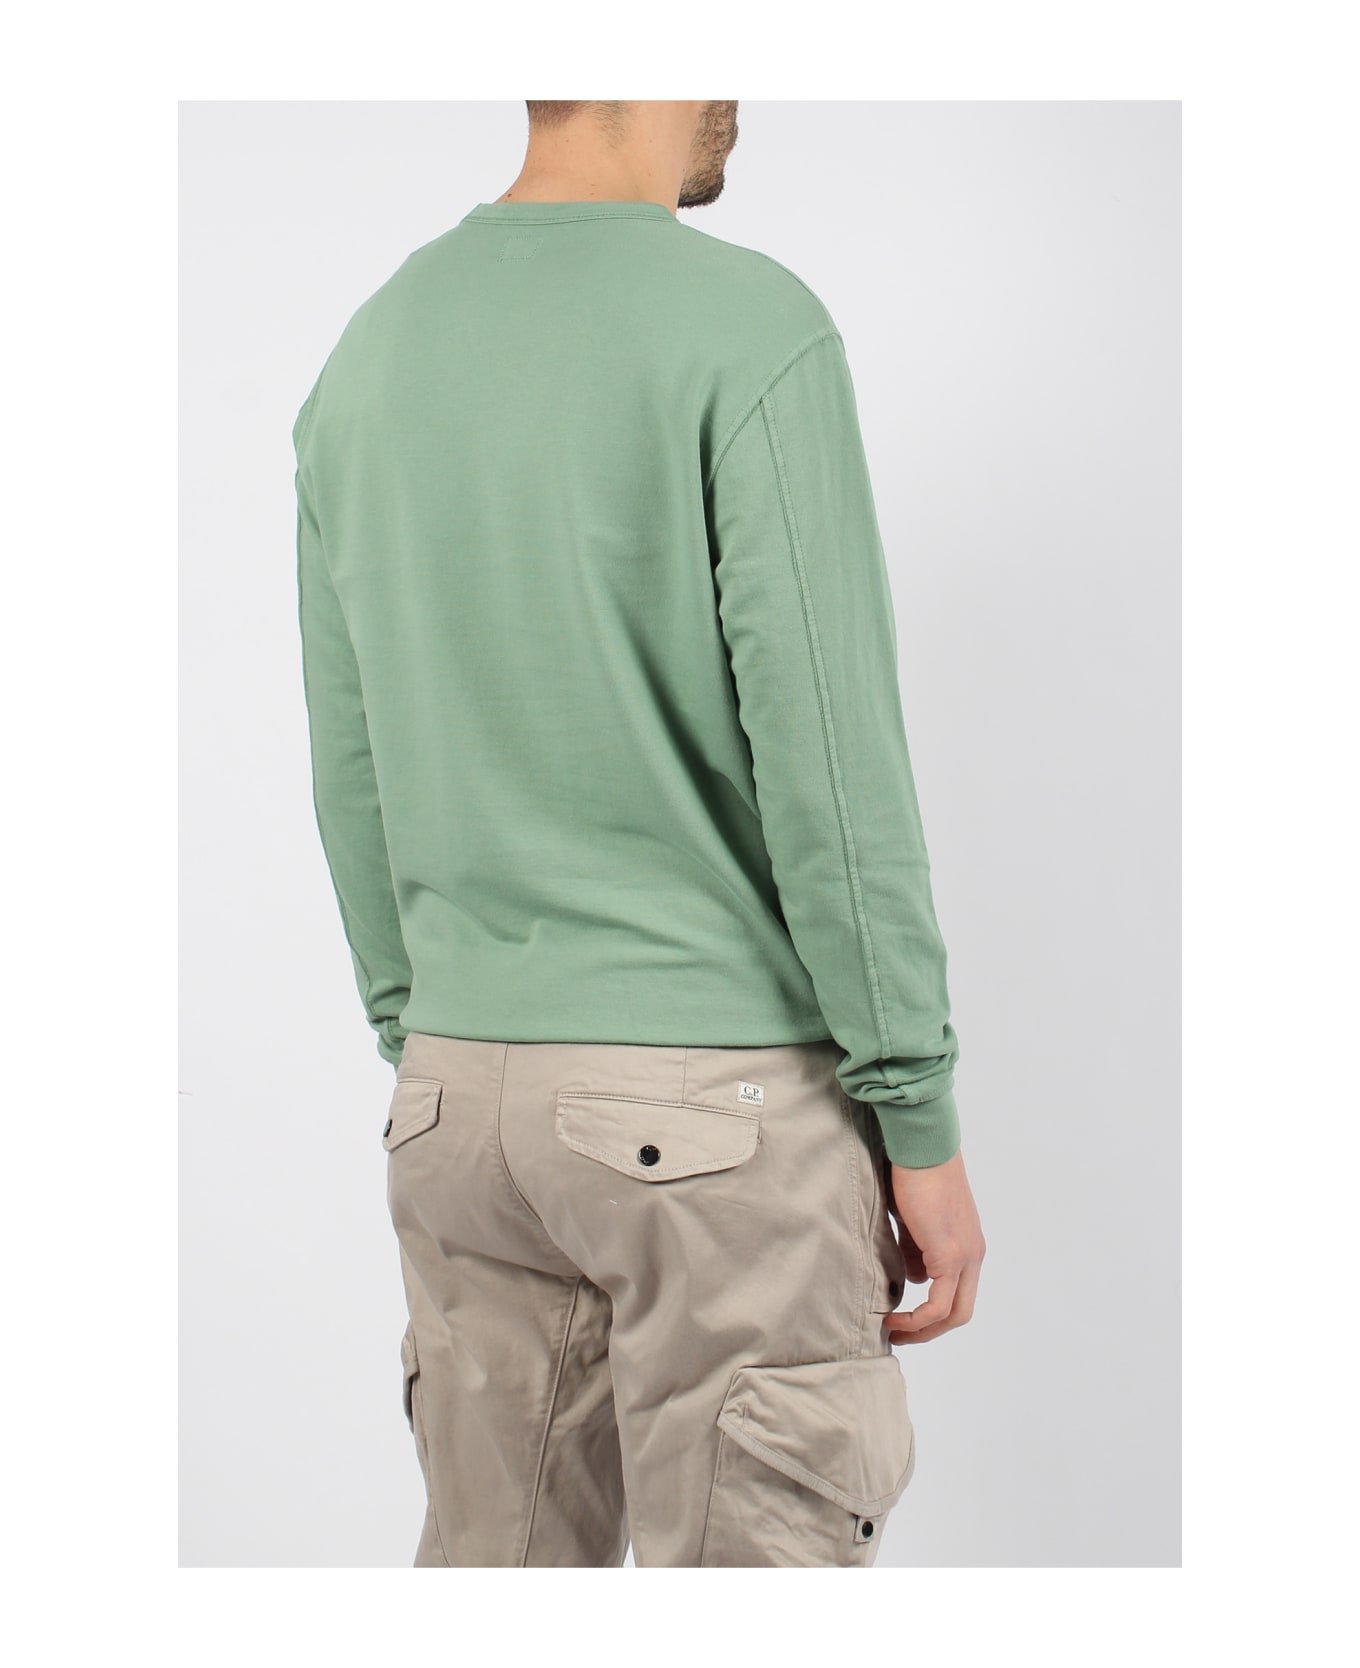 C.P. Company Light Fleece Sweatshirt - Green フリース